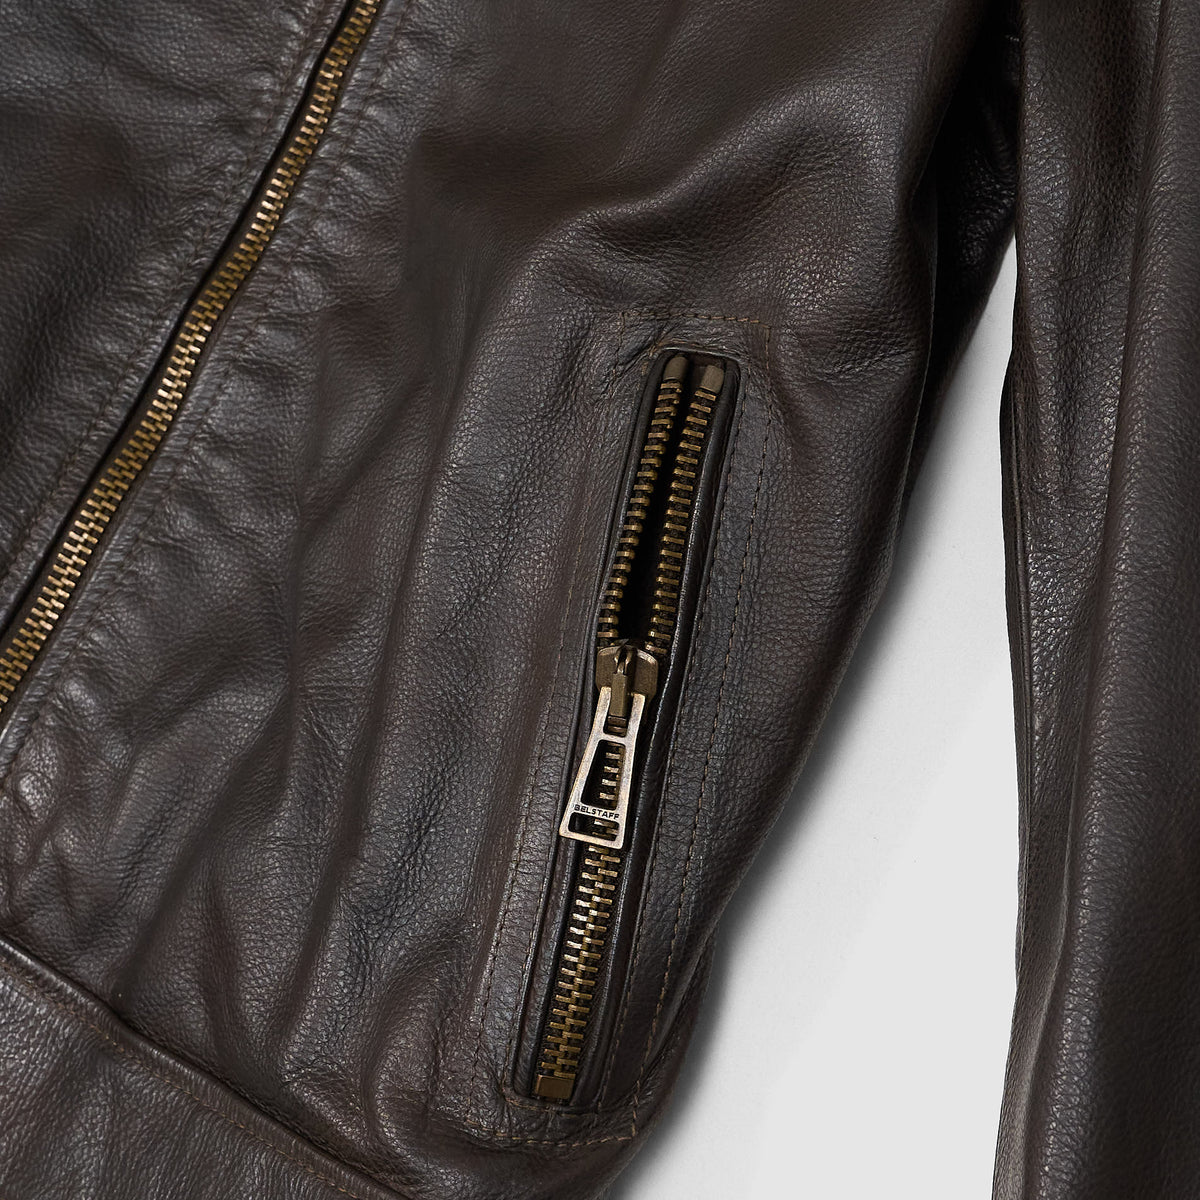 Belstaff Outlaw Leather Jacket